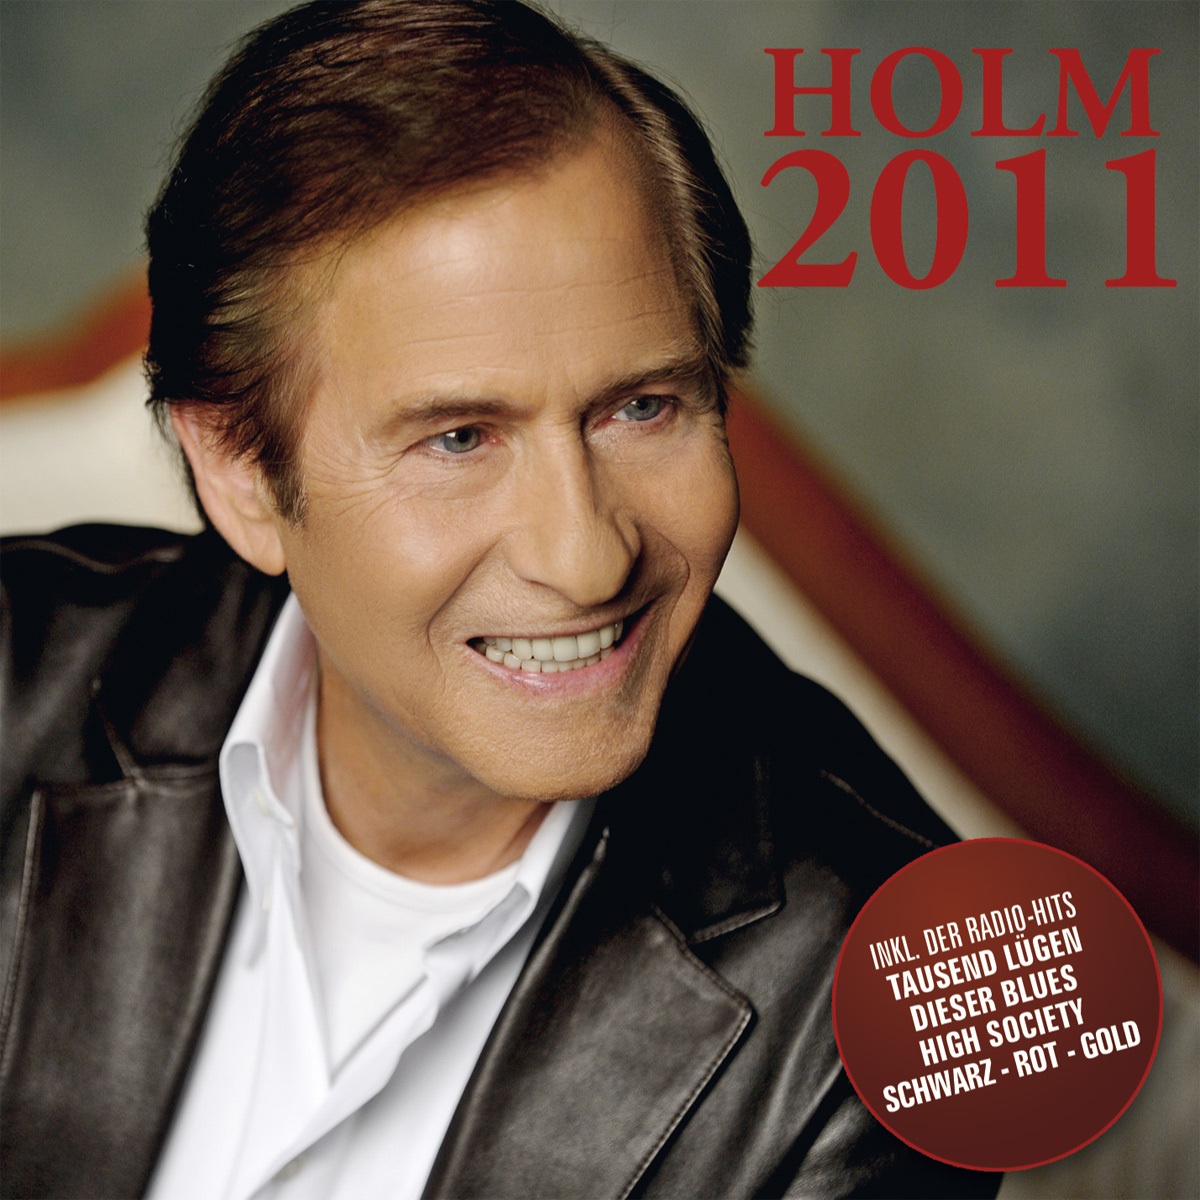 Holm 2011 - Michael Holm. (CD)